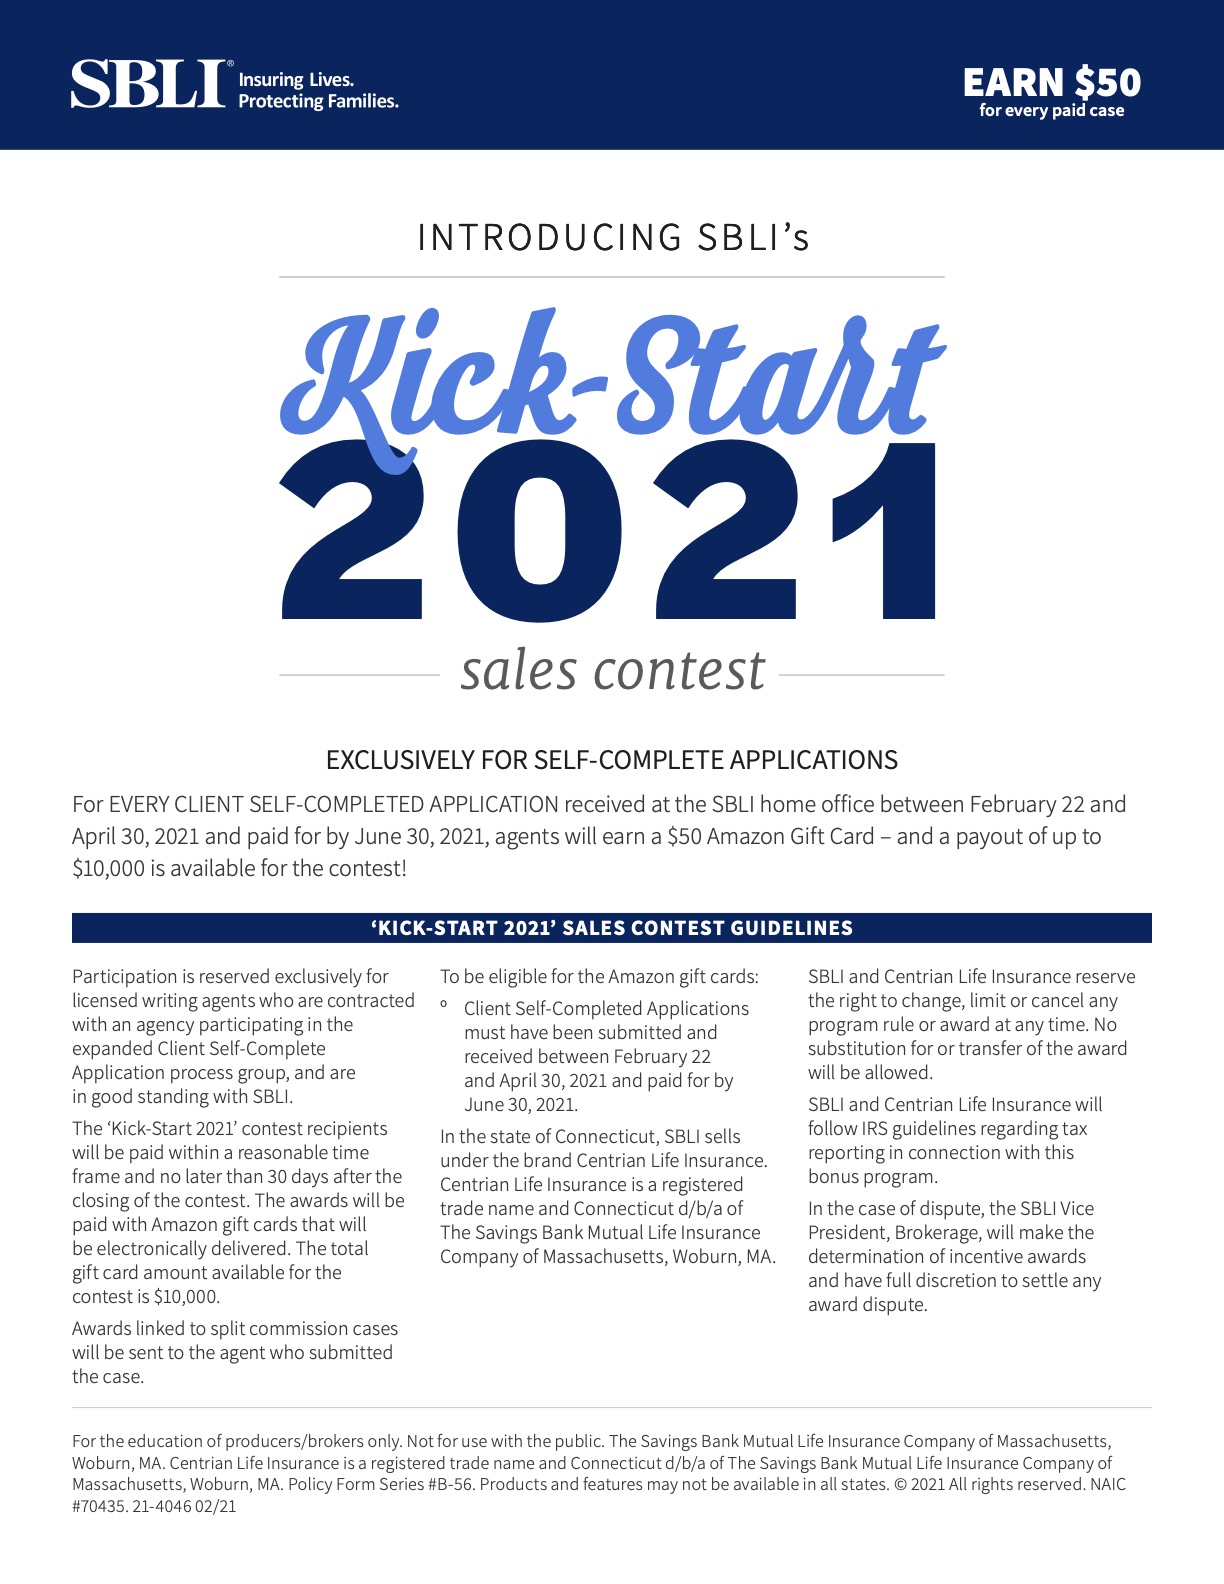 Kick-Start 2021